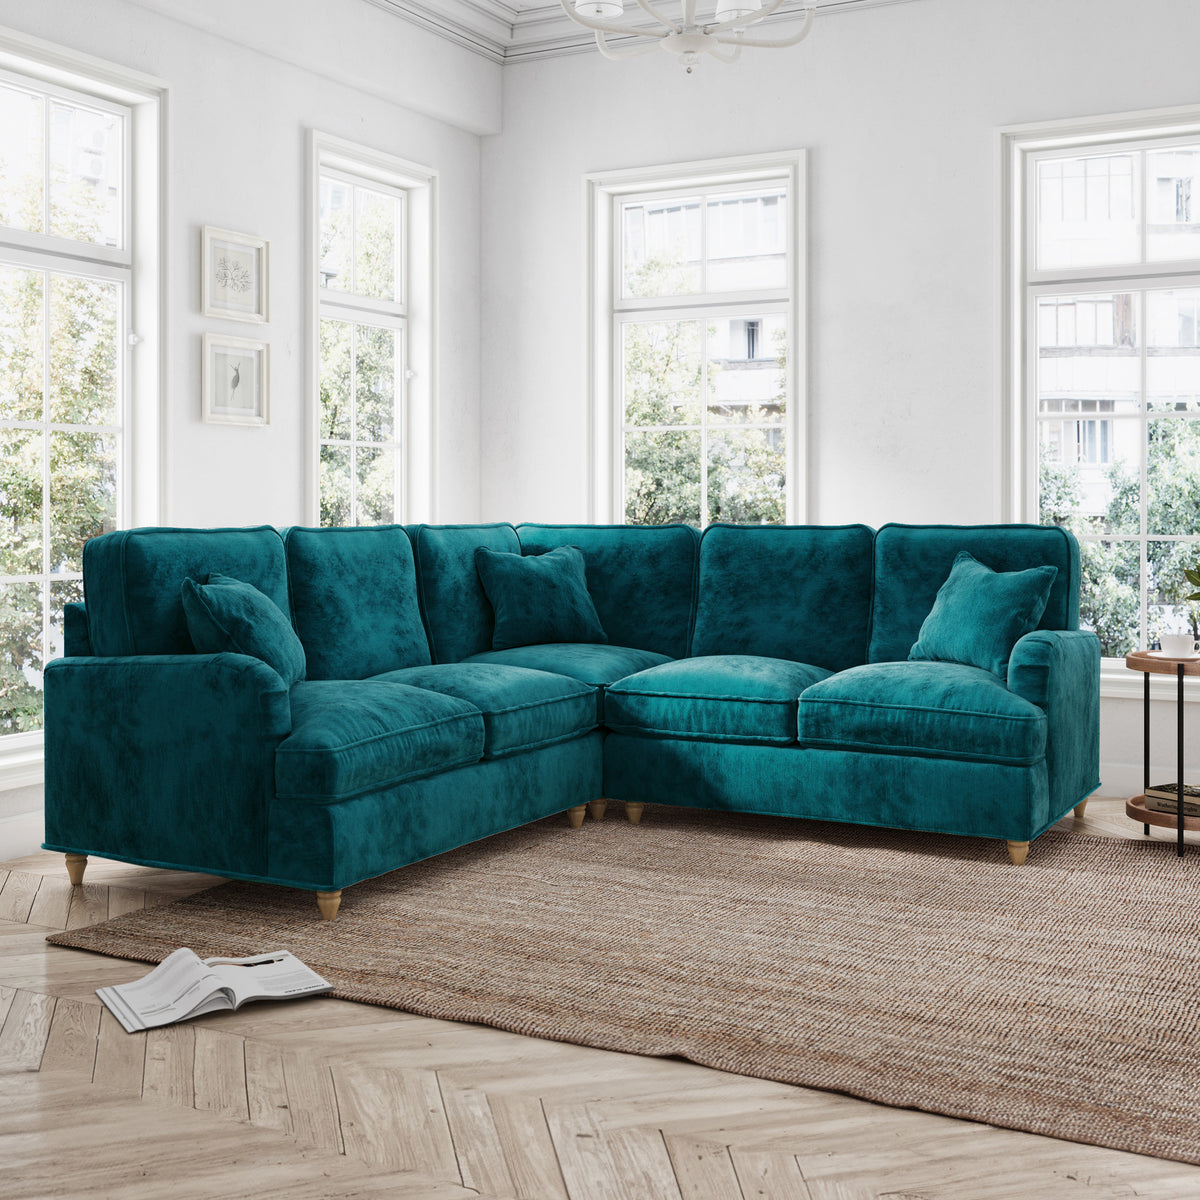 Arthur Emerald Green Large Corner Sofa from Roseland Furniture